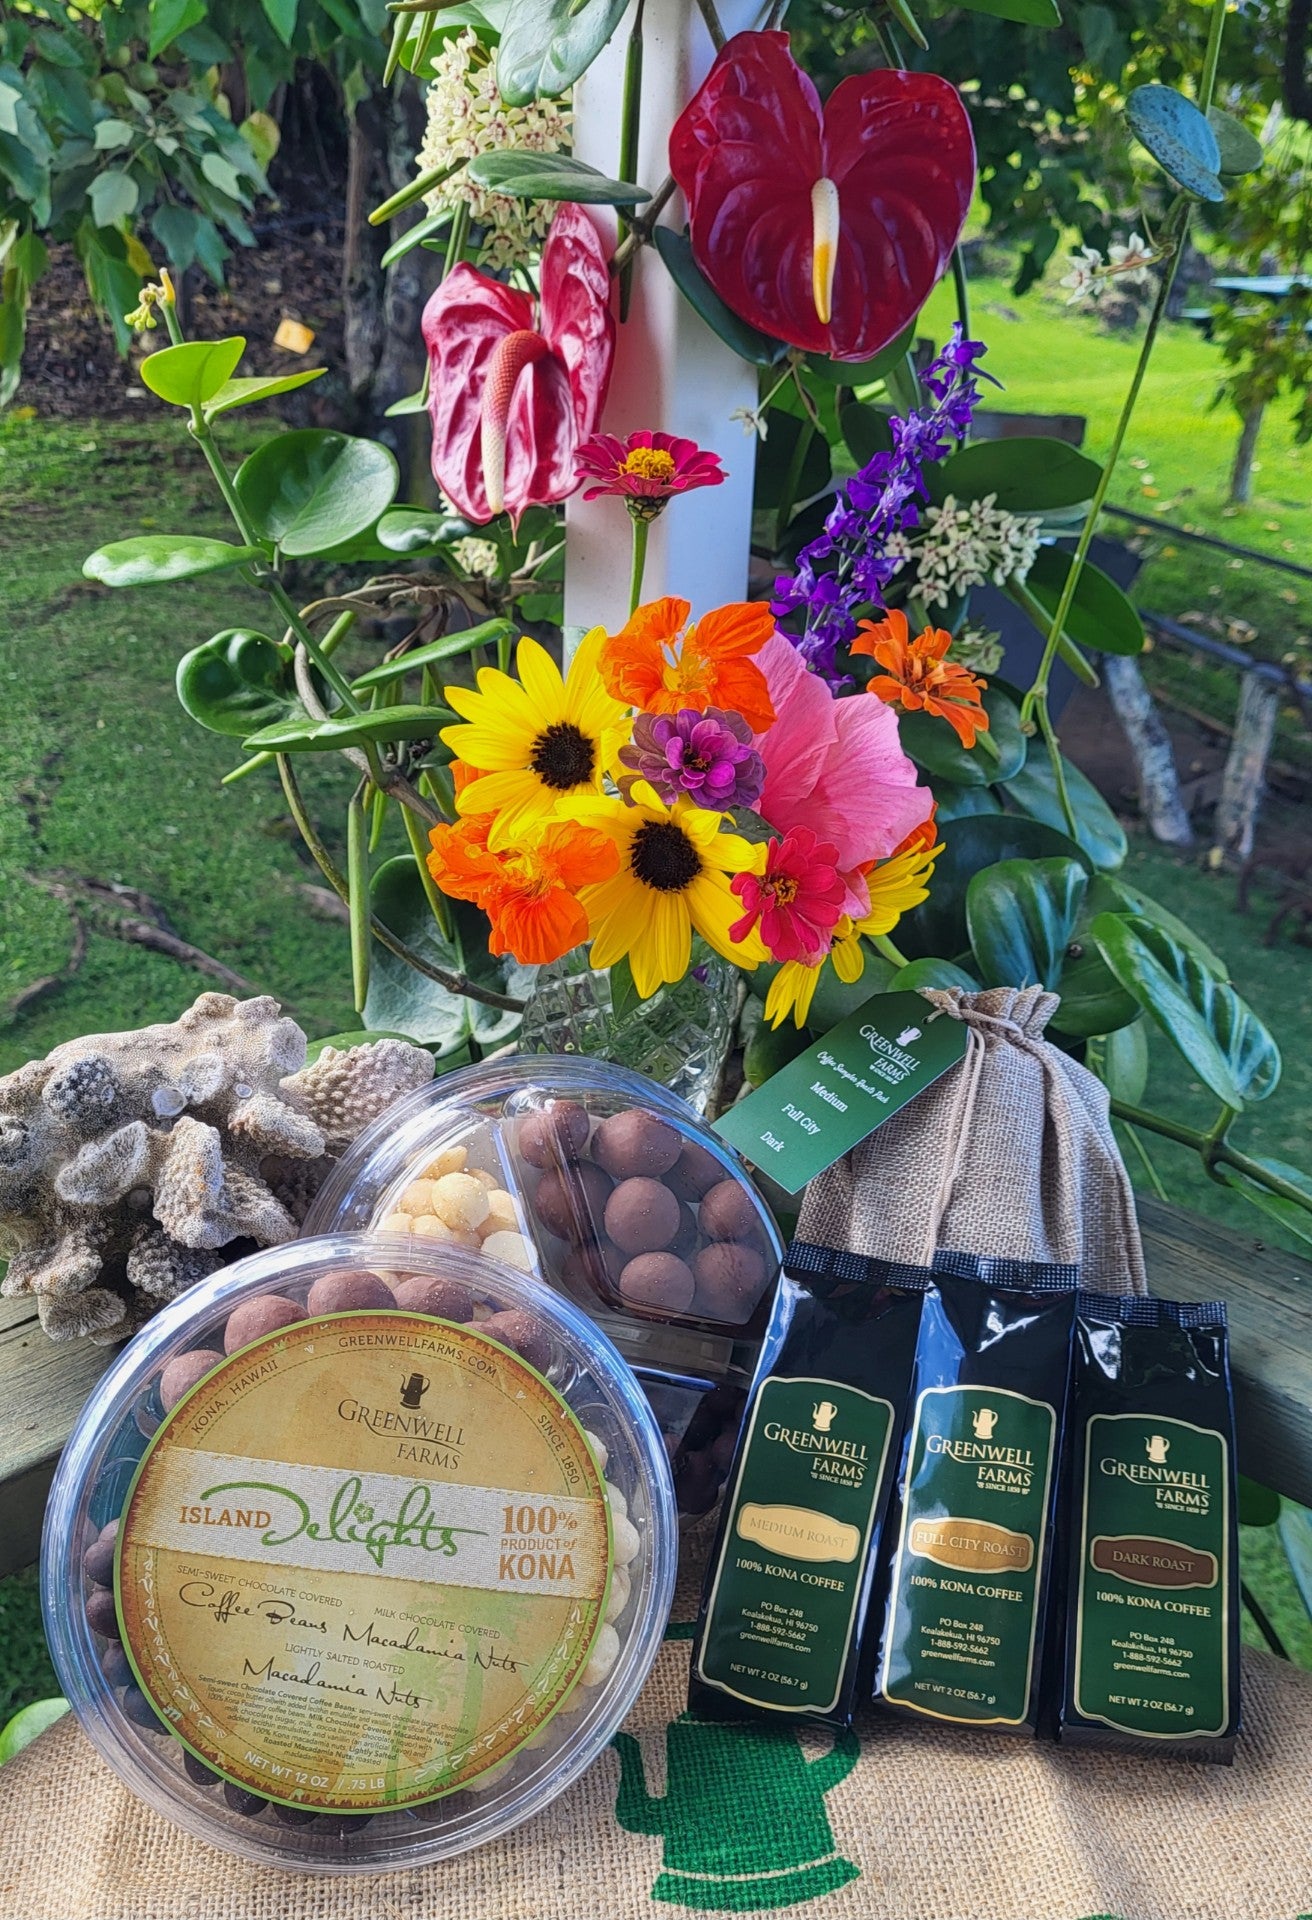 Greenwell Farms Mother's Day Bundle 100% Kona coffee sampler with chocolate macadamia nuts